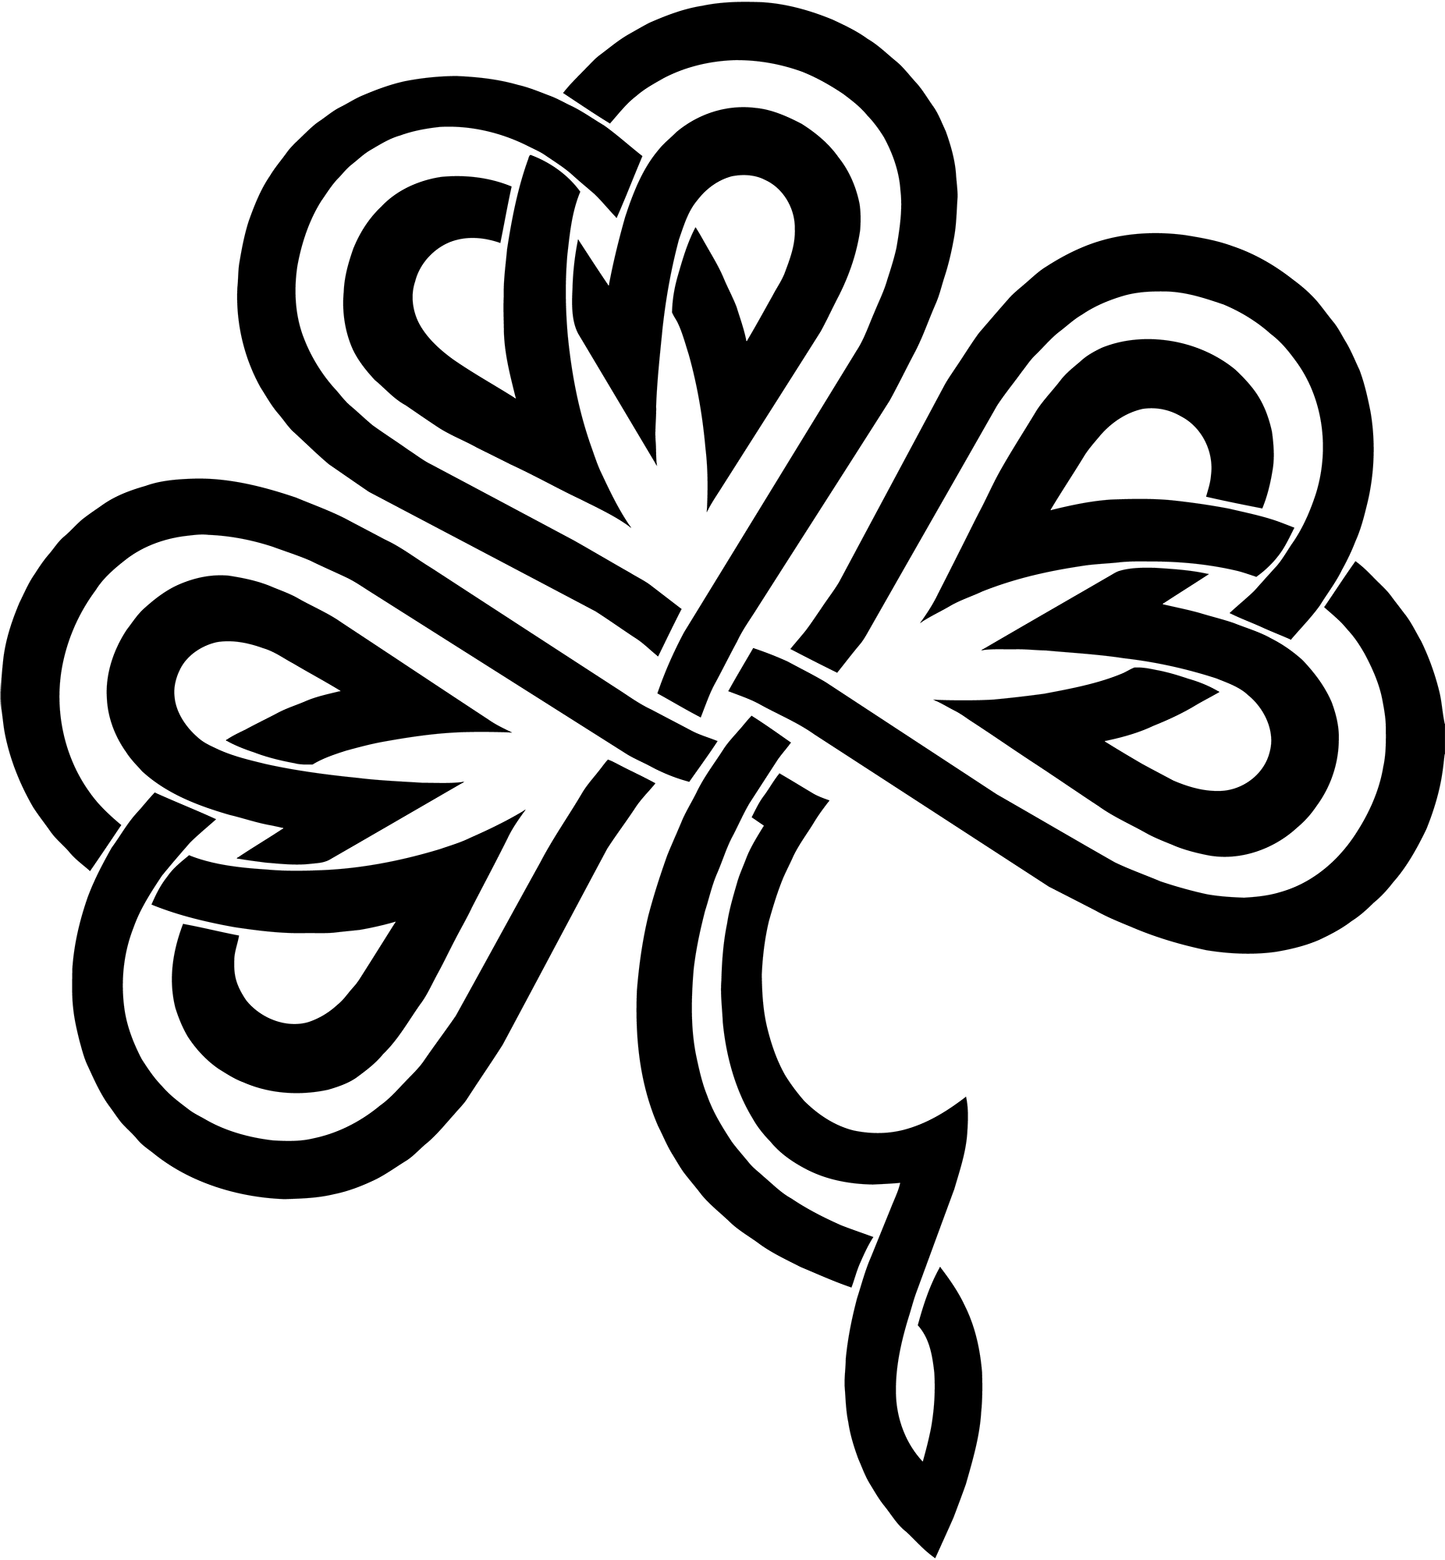 Fancy Irish Shamrock Celtic Knot Vinyl Decal Sticker